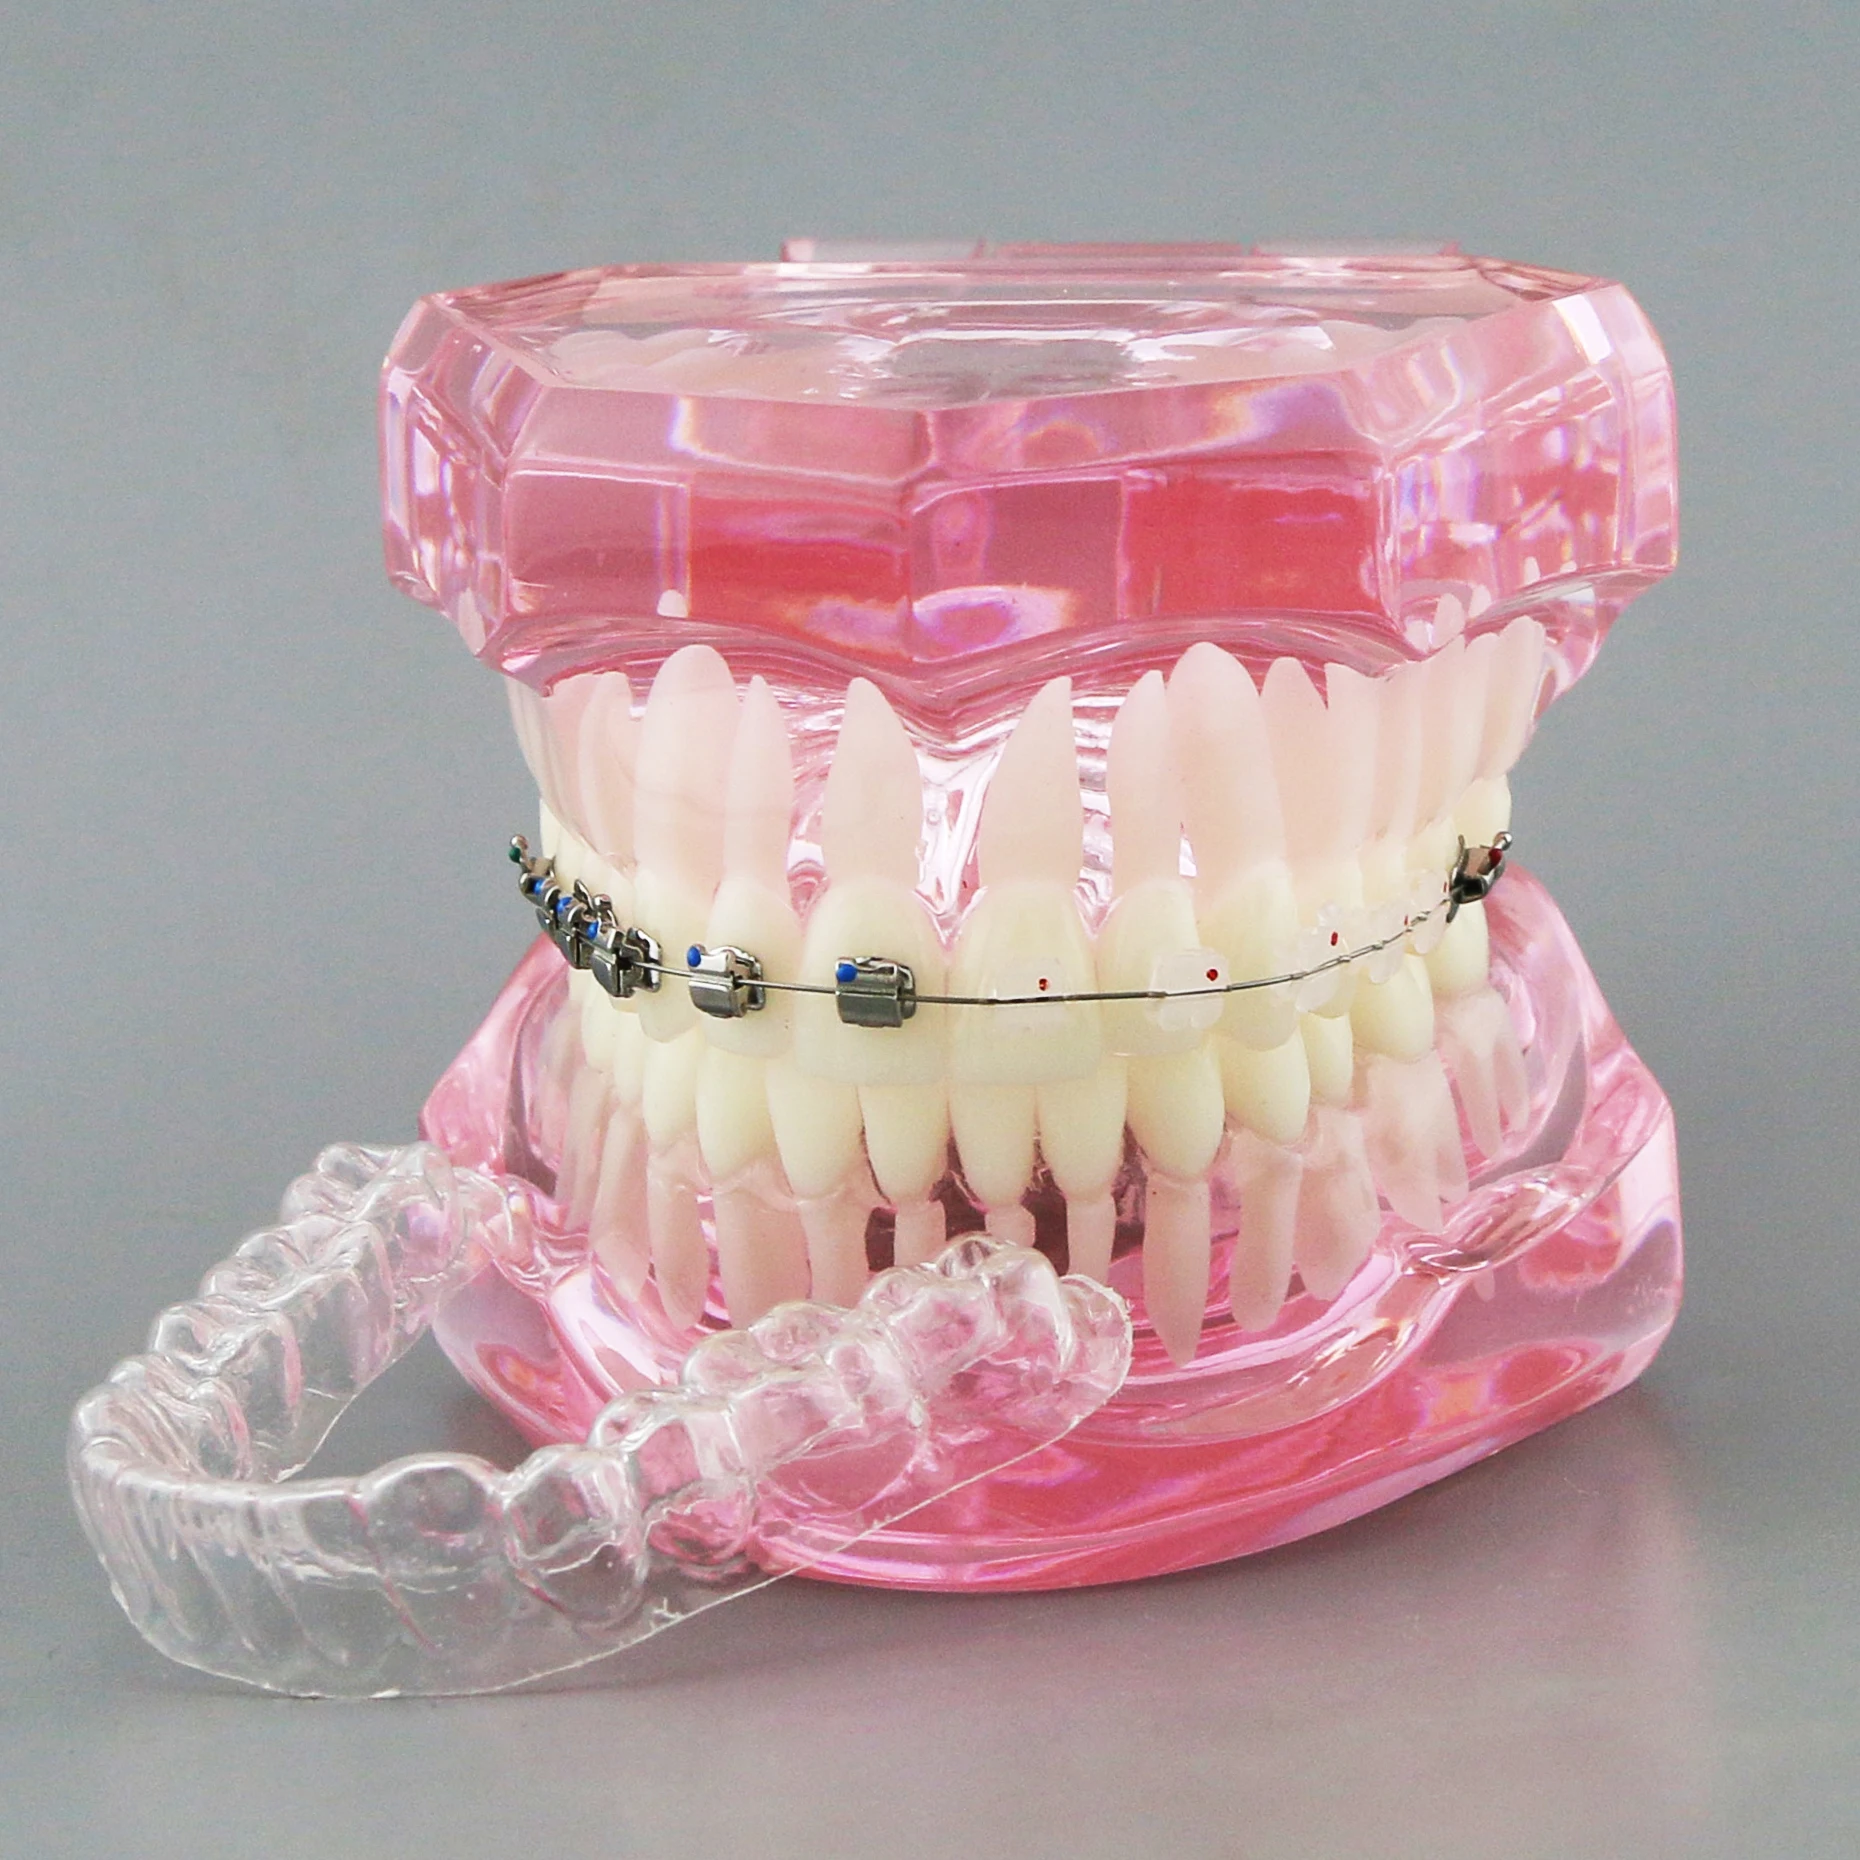 Dental Orthodontic Model with Metal Self-ligating Ceramic Braces Retainer Demonstration Study Teeth Model M3012